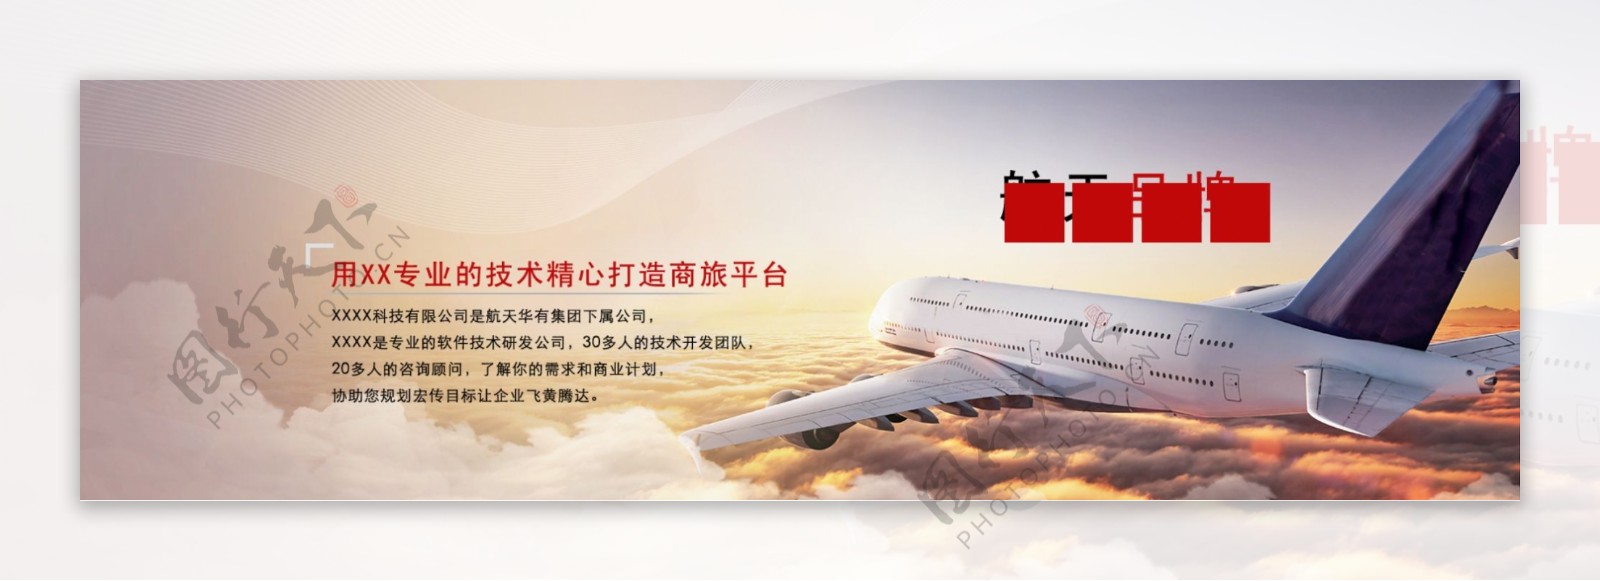 航空飞机banner横幅设计PSD